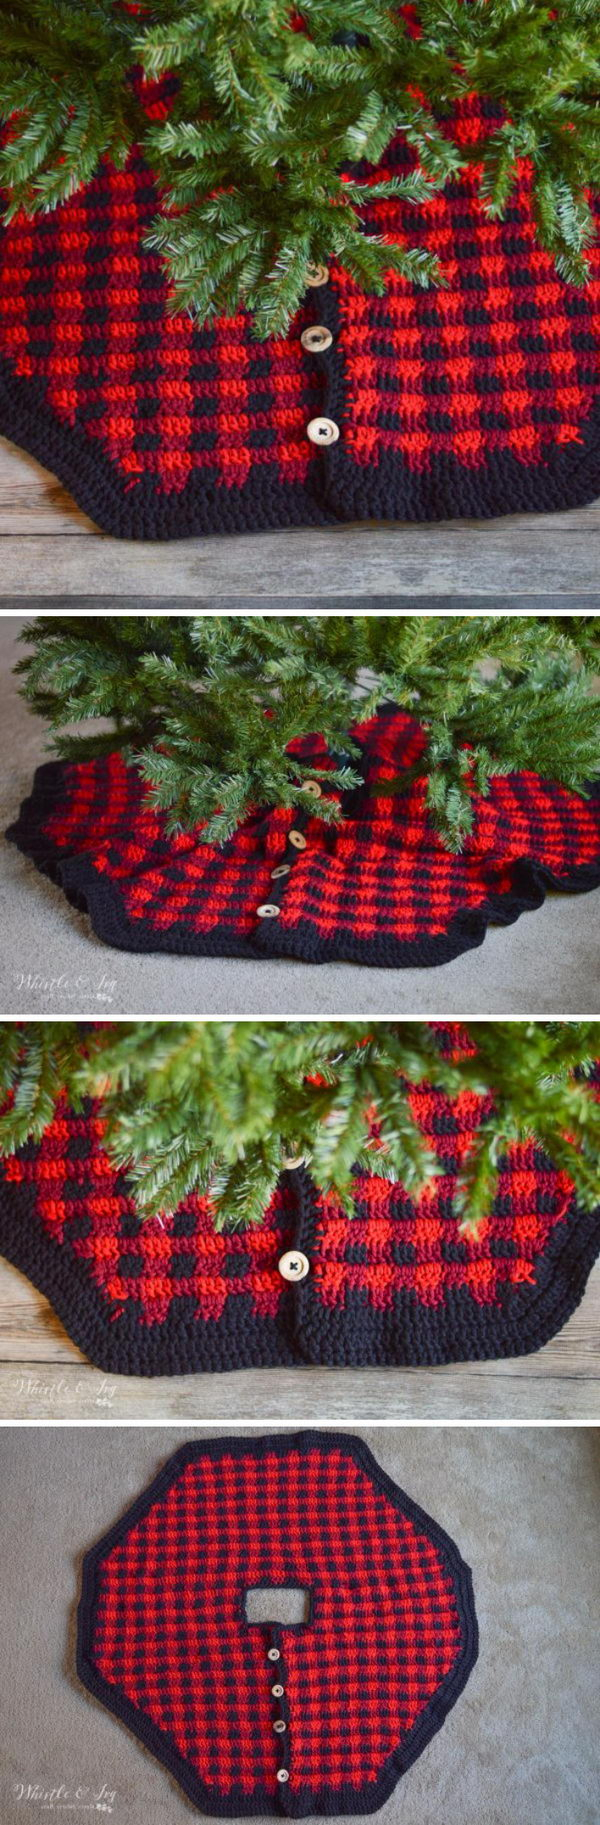 Crochet Tree Skirt Pattern 10 Crochet Christmas Tree Skirt Ideas 2017